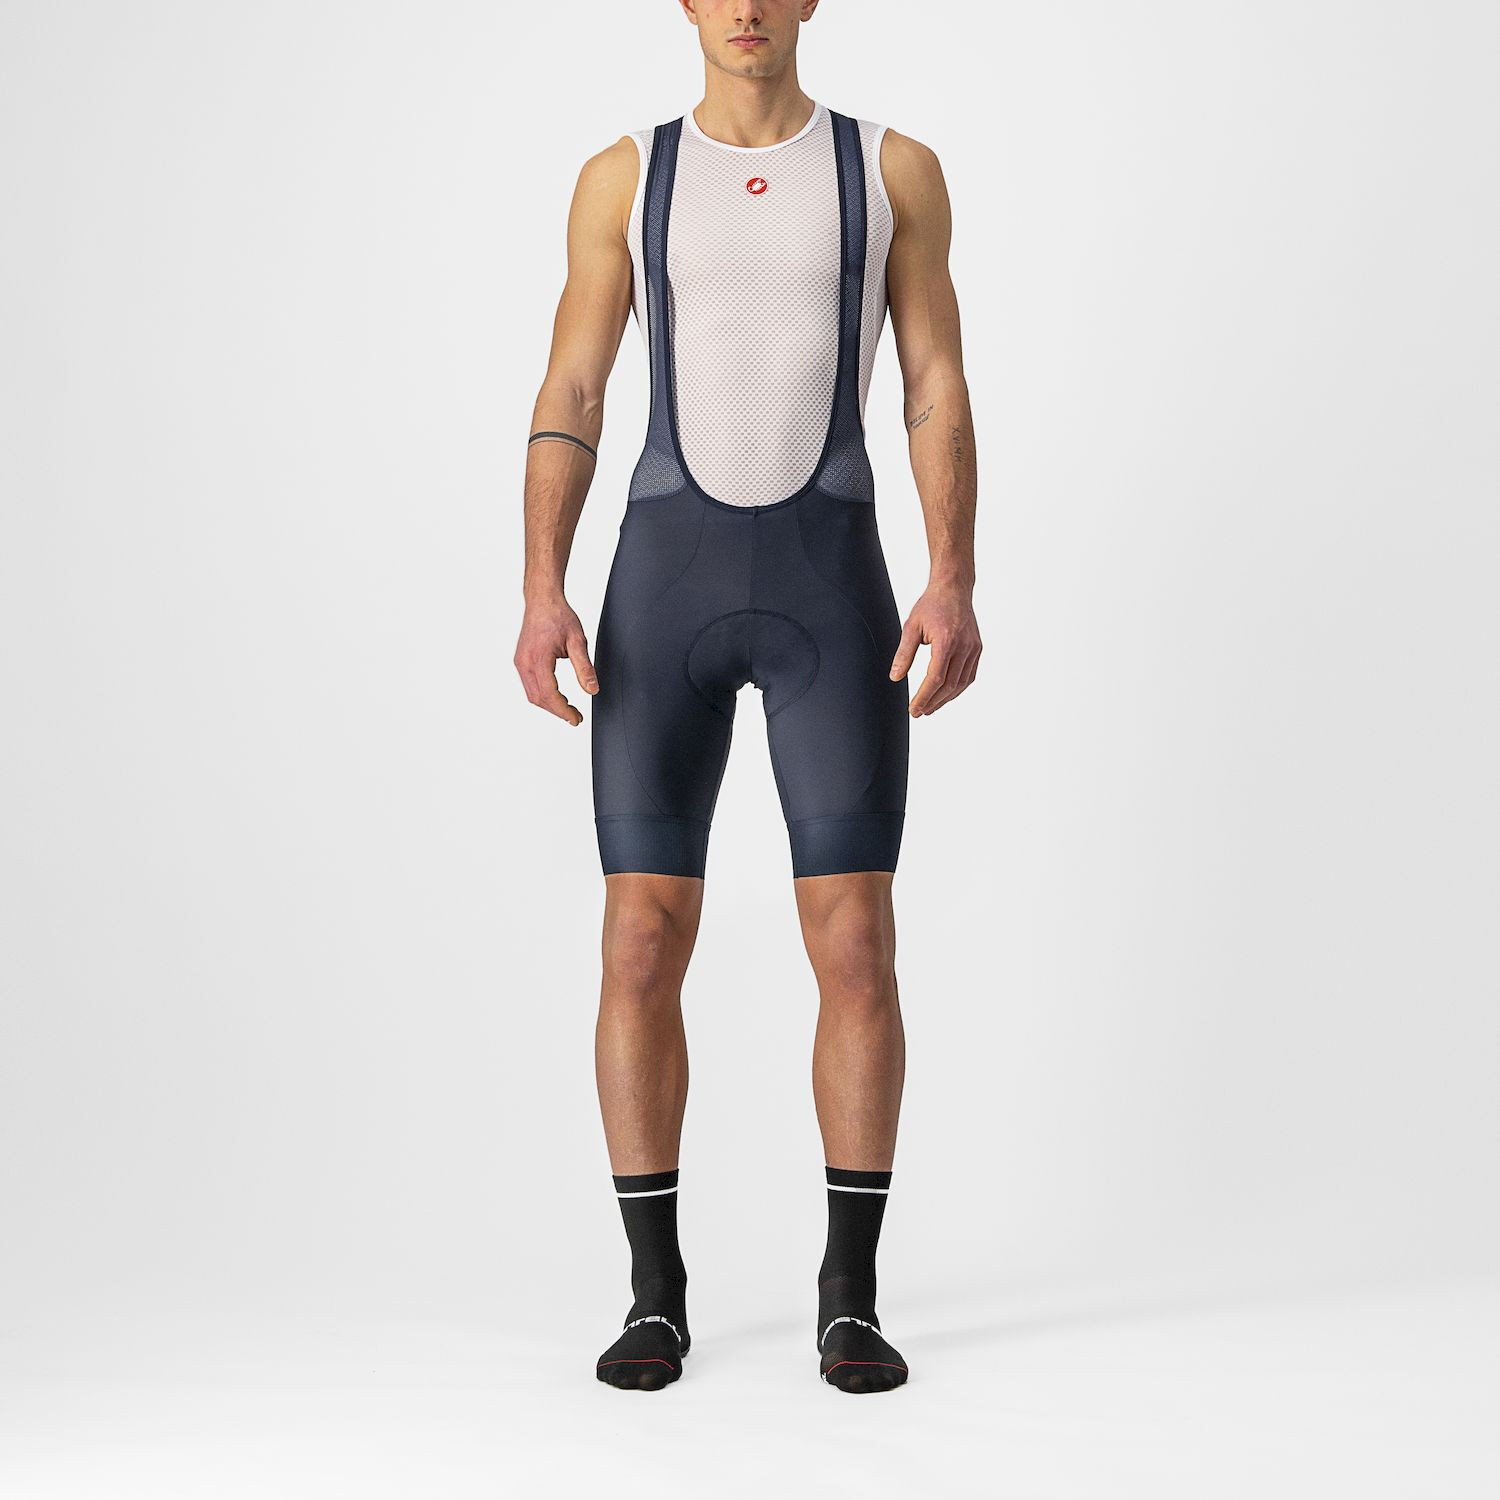 Castelli Entrata Bibshort - Cycling shorts - Men's